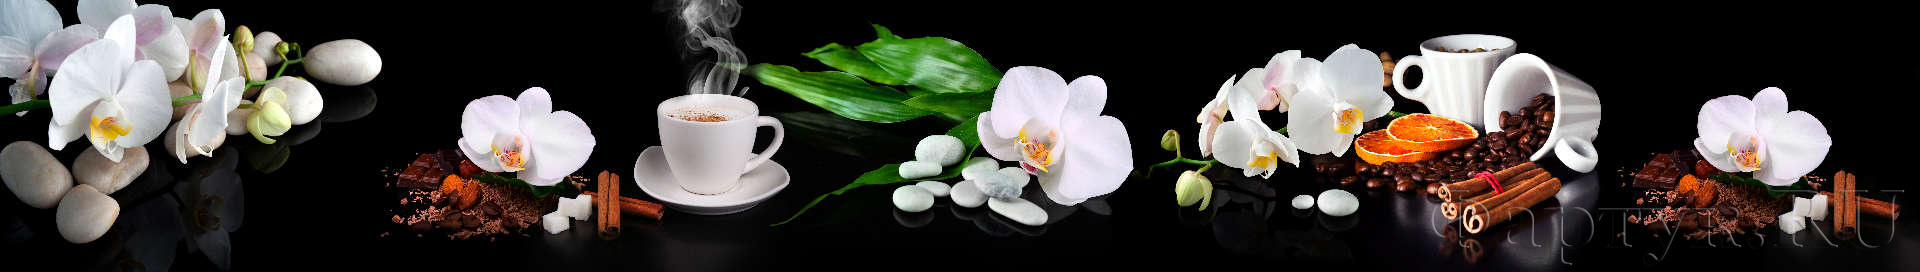 Коллаж орхидеи на камнях и кофе со специями